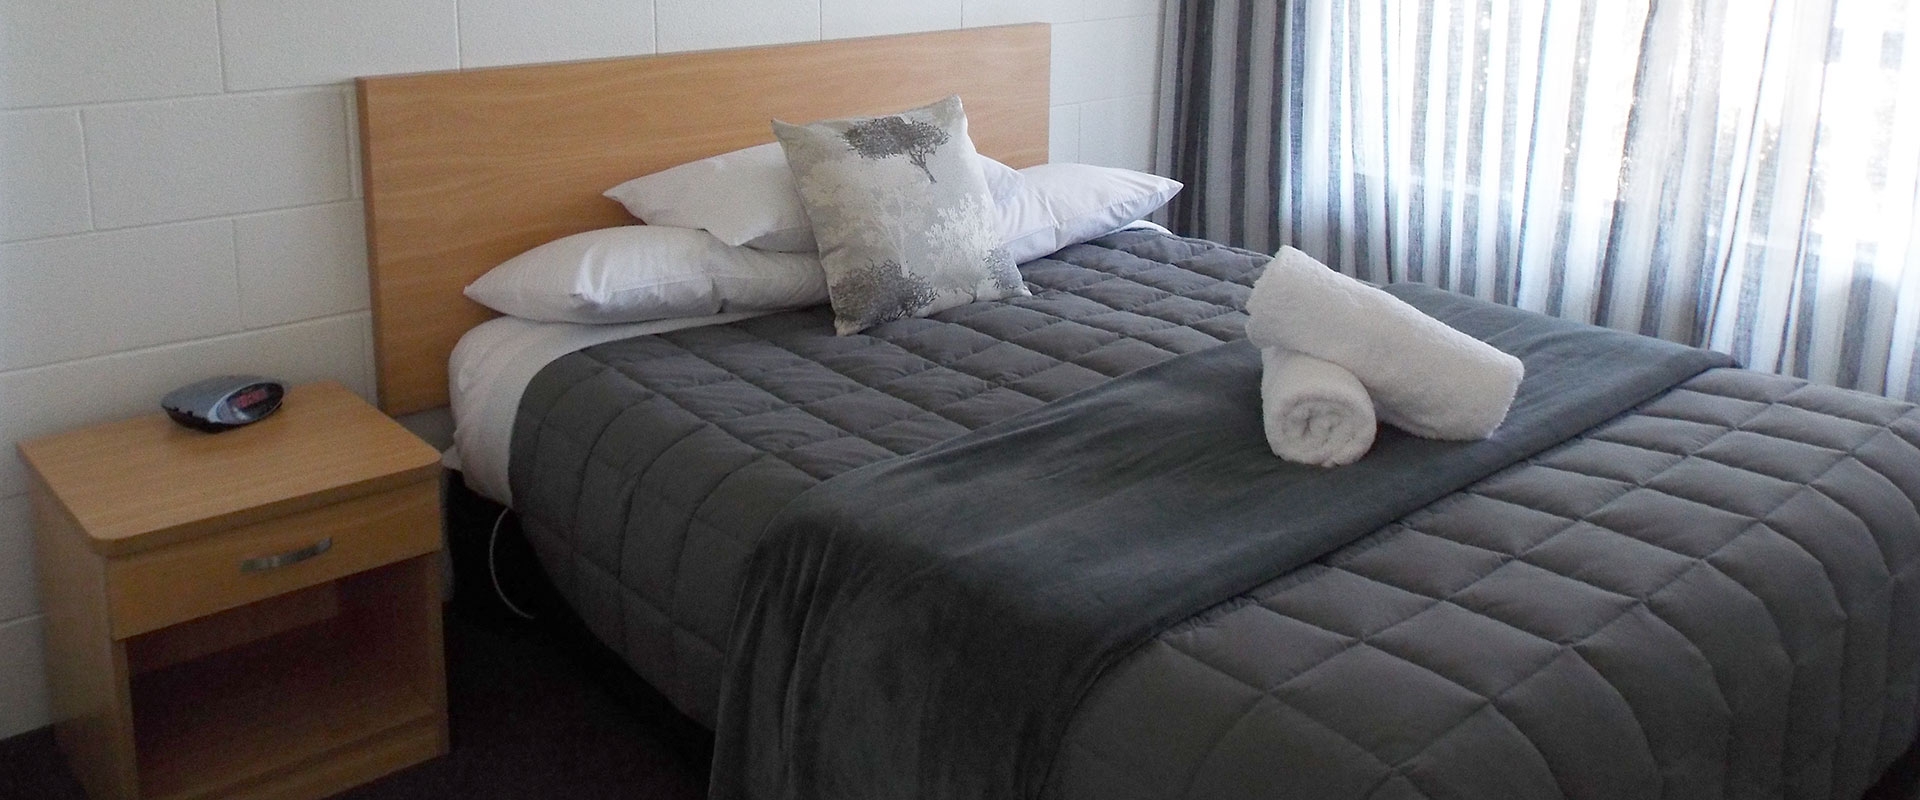 comfortable queen-size beds